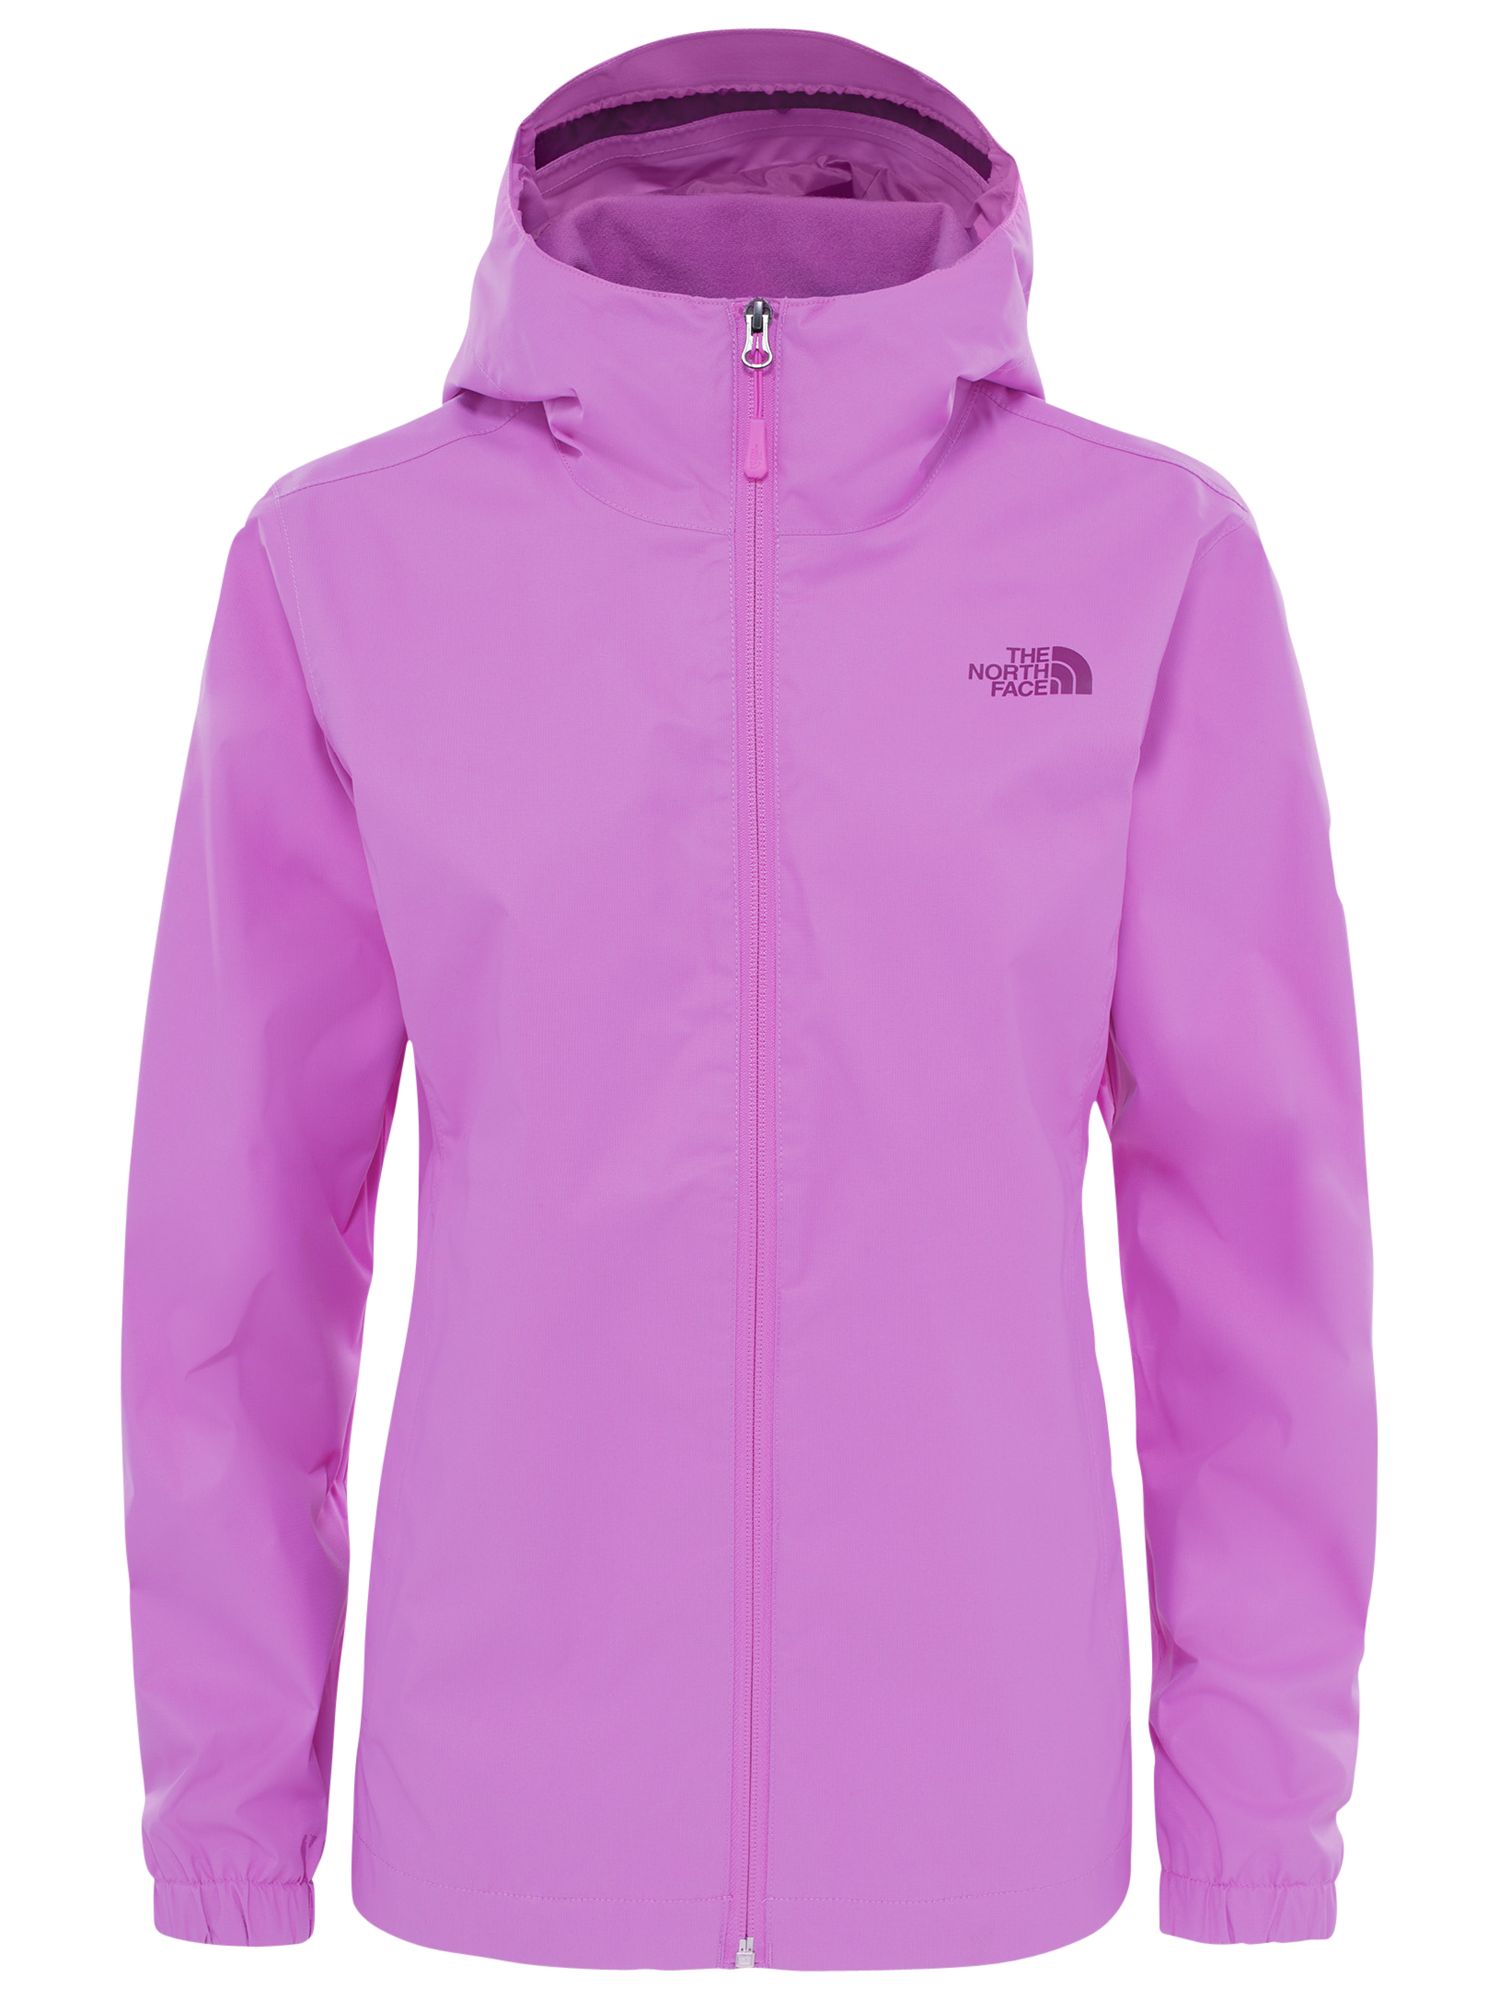 The North Face Quest Waterproof Women's Jacket, Purple, XL